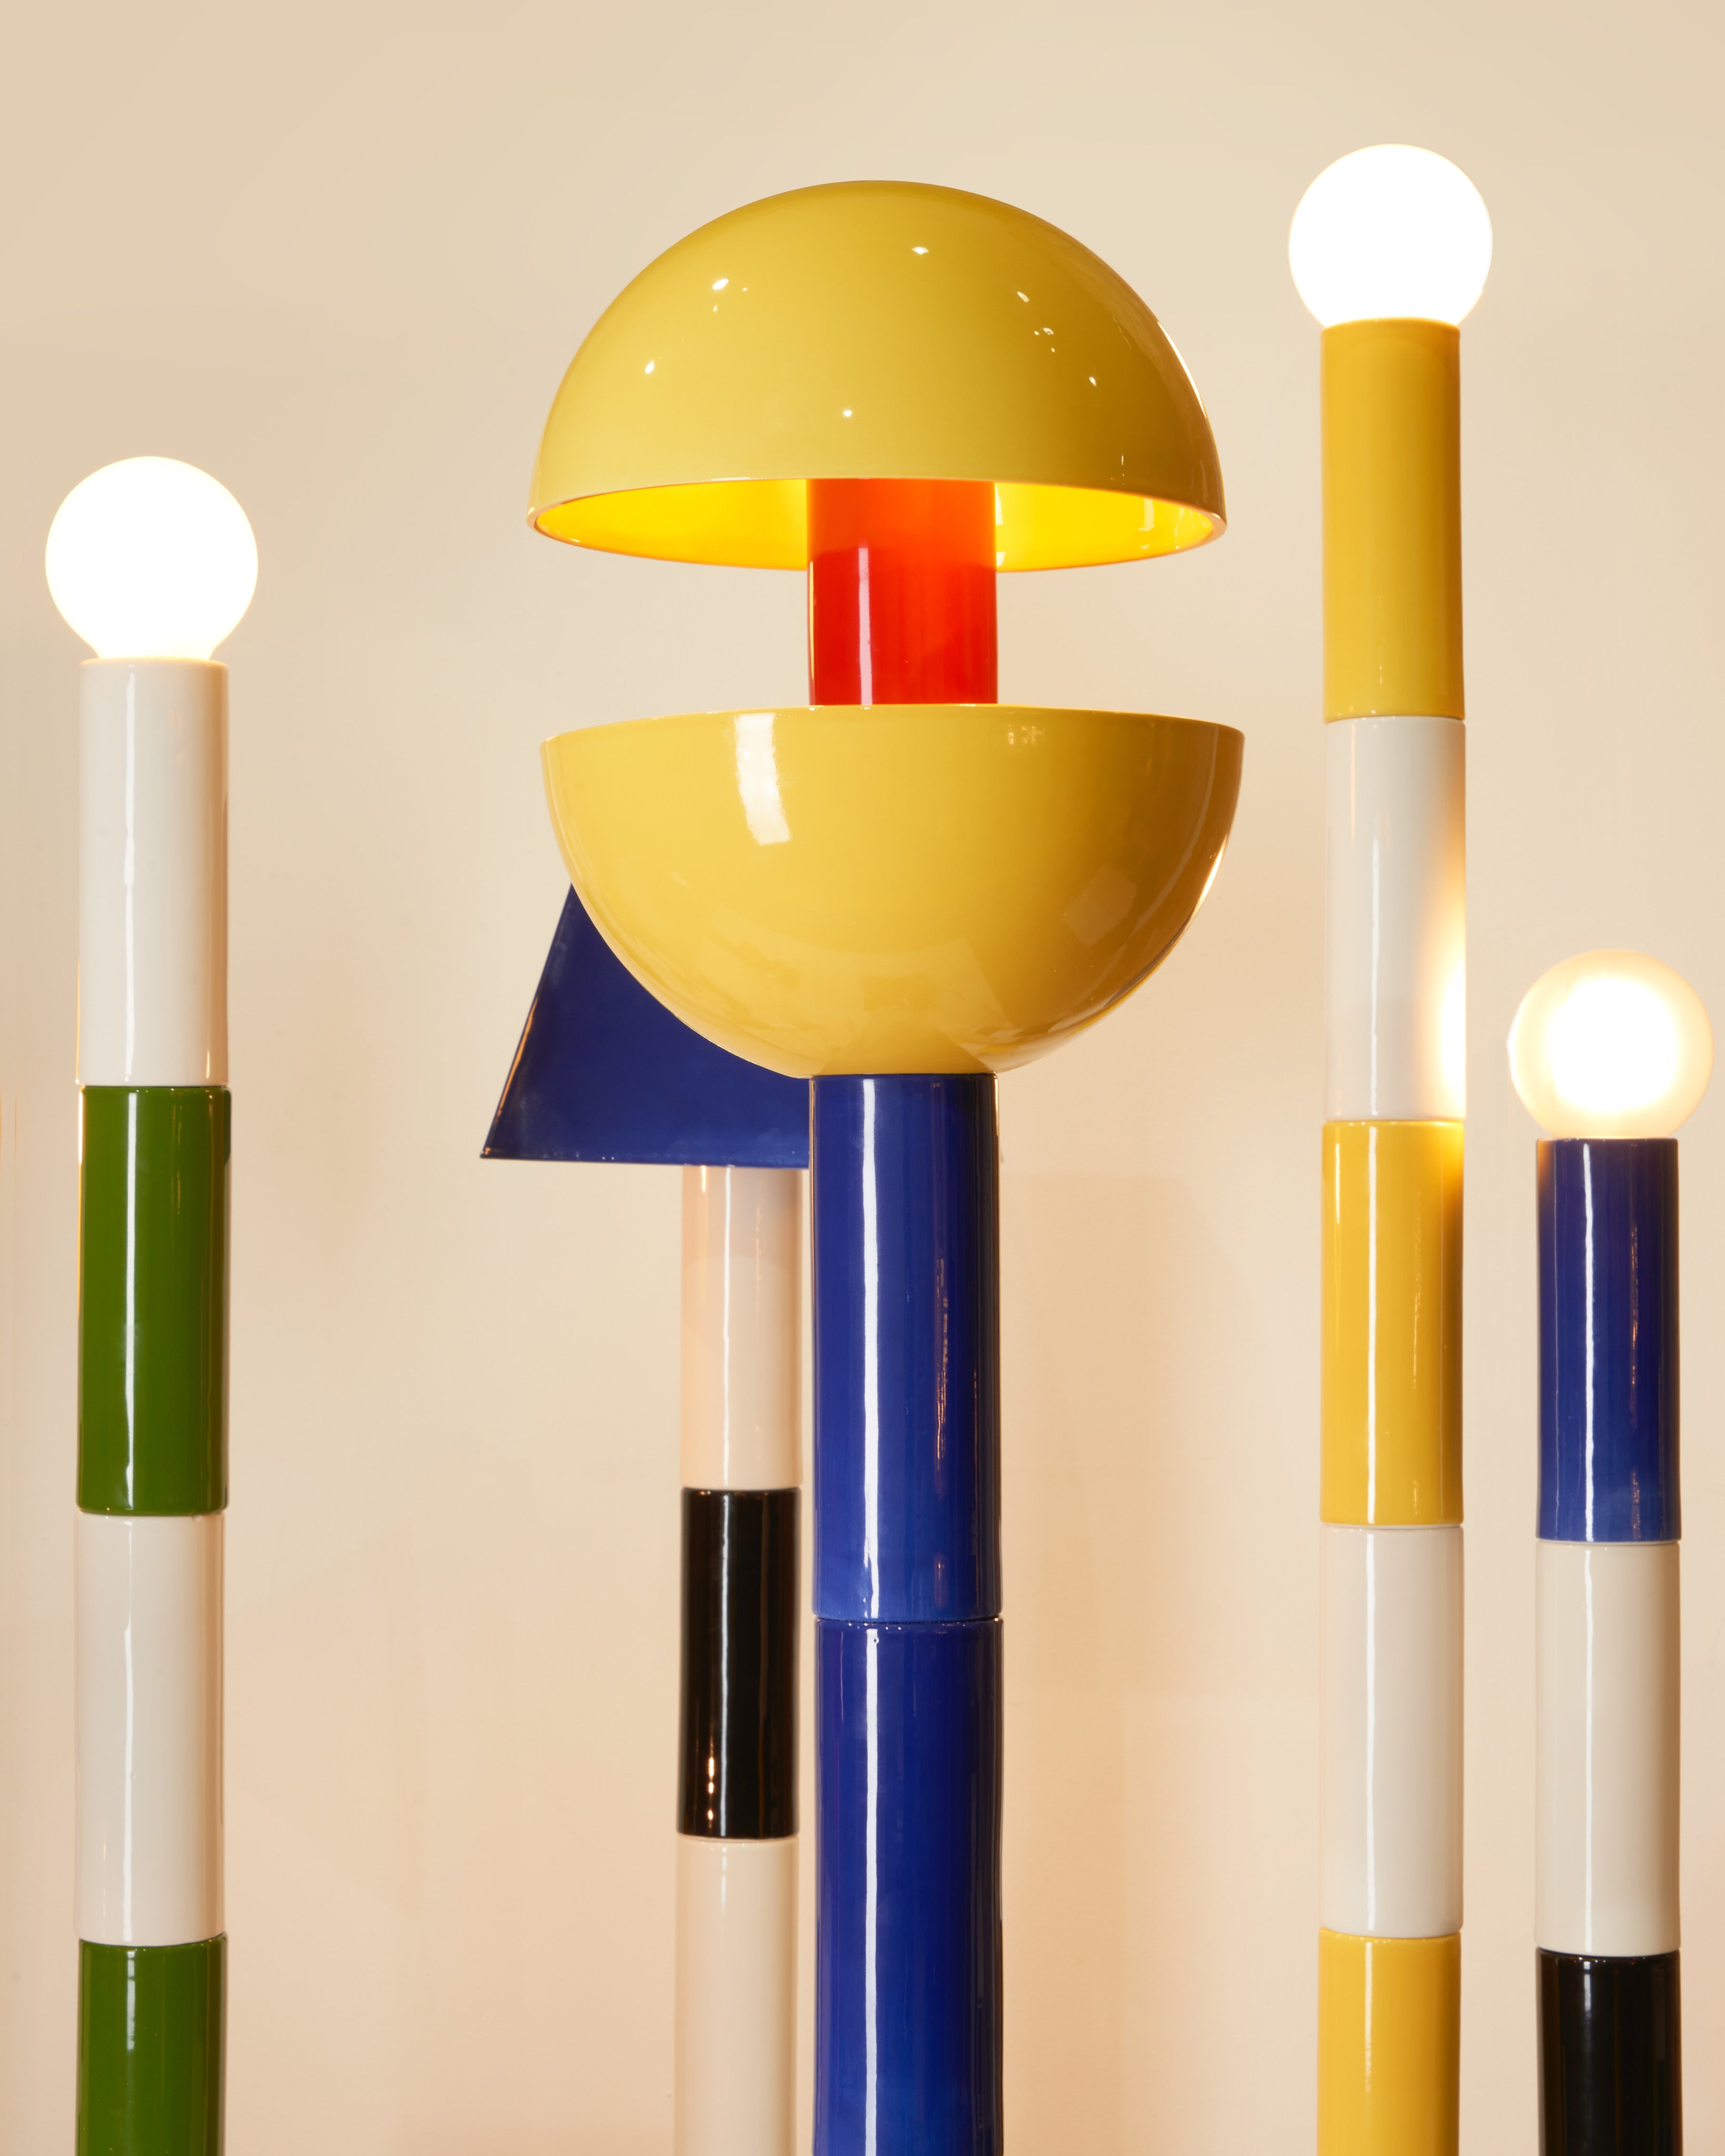 Details - Modular ceramic #floorlamps #lightingsculpture - made by hand in Italy // #lampadaire sculpture en céramique, modulable sur demande - - Made to order - DM for price -  📸 @anaisbarelli  . . NB: registered designs . . #ceramicart #destijl